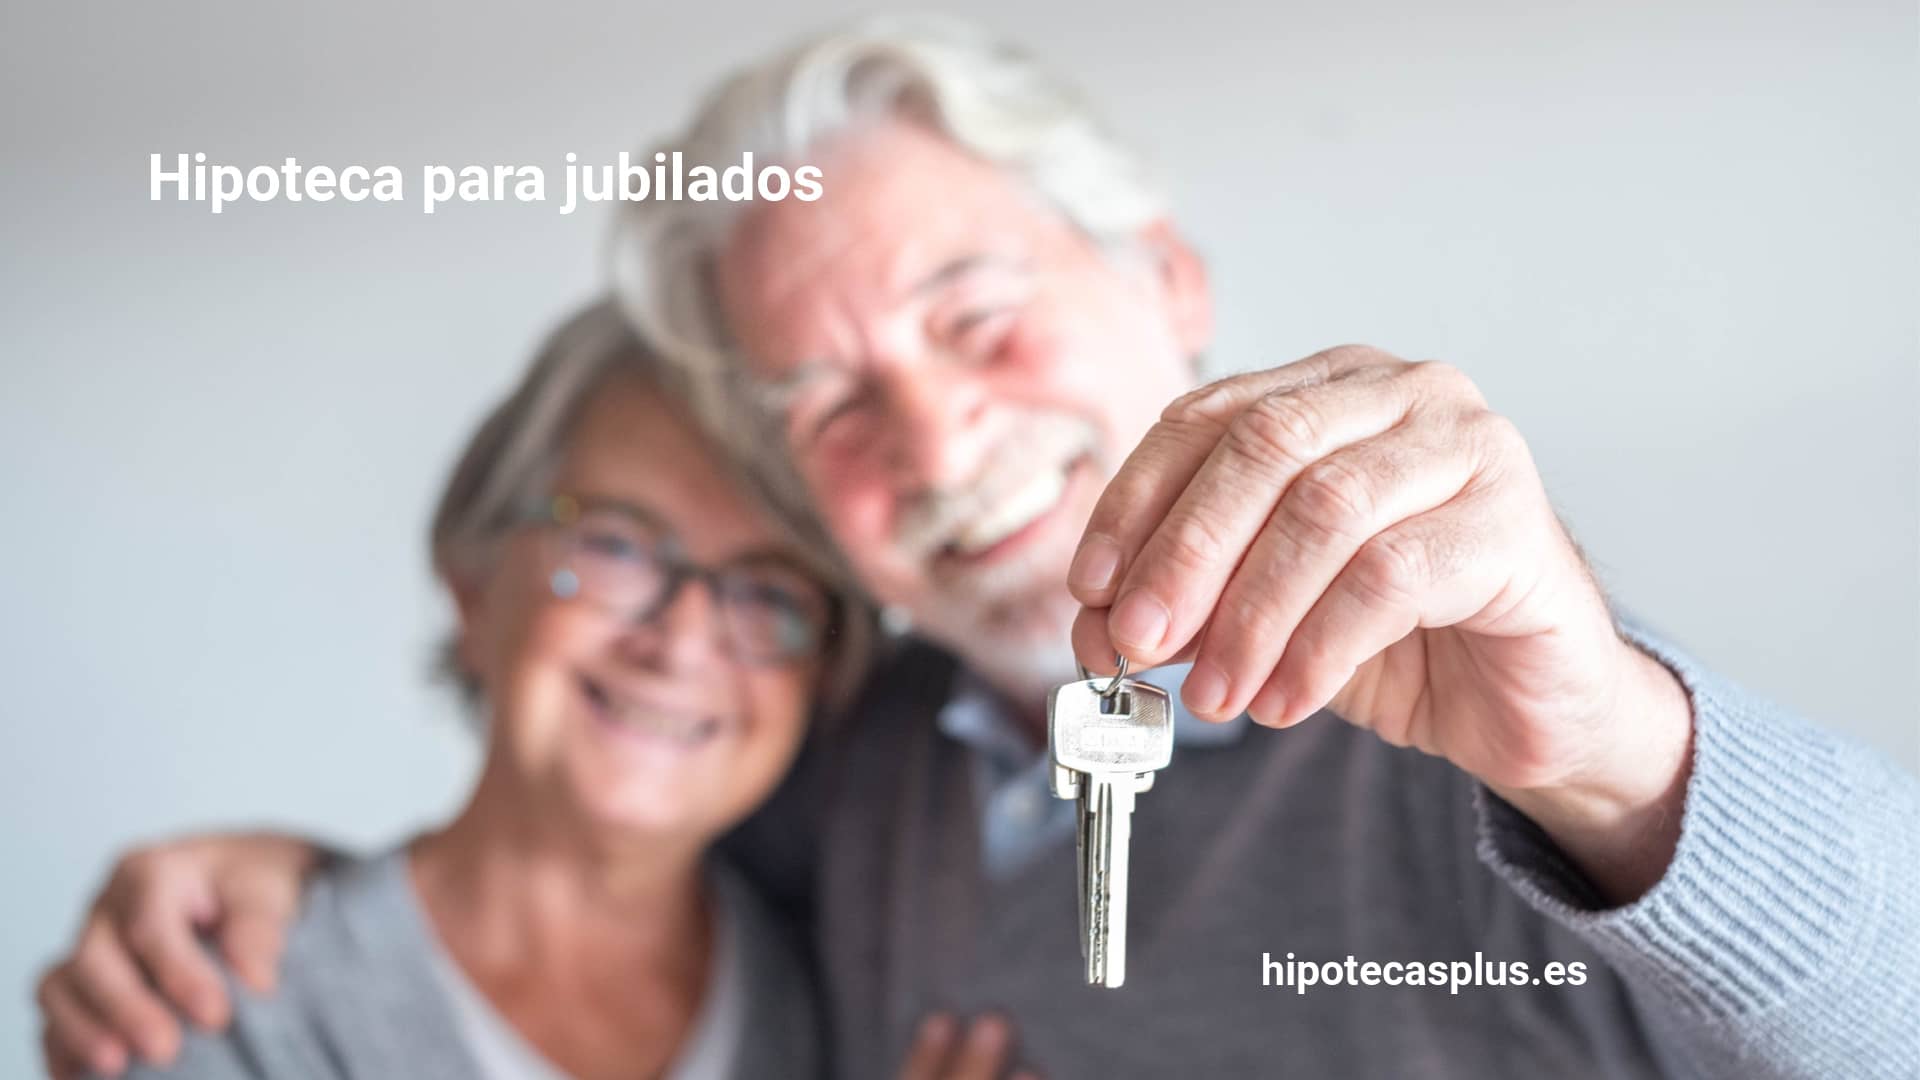 https://www.hipotecasplus.es/wp-content/uploads/HipotecasPlus-Hipoteca-para-jubilados-.jpg